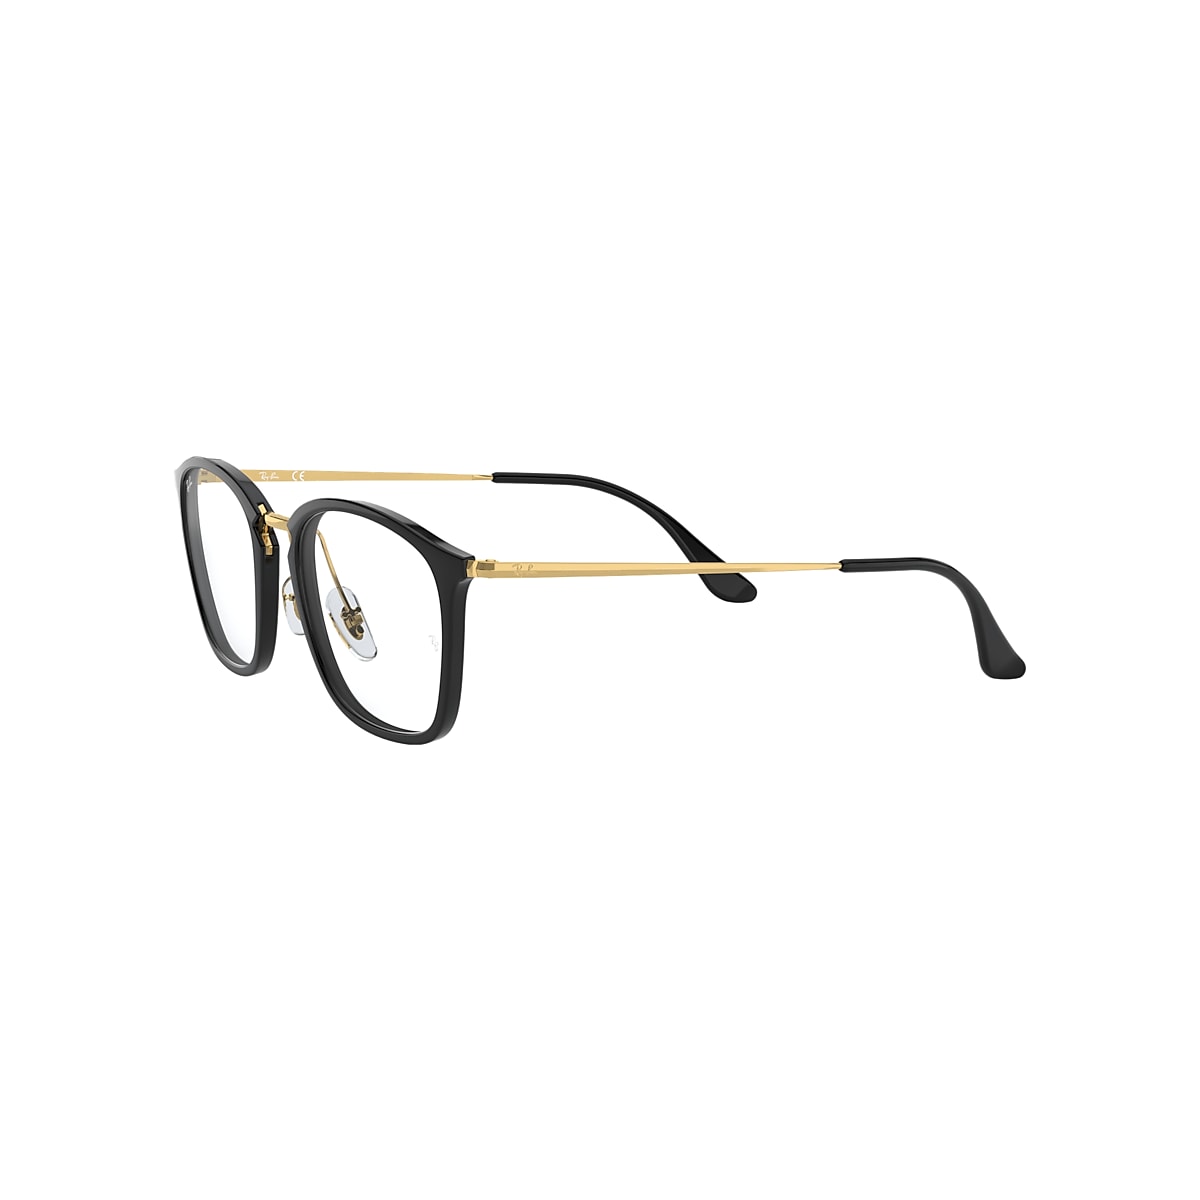 Rb7164 Eyeglasses with Black Frame | Ray-Ban®